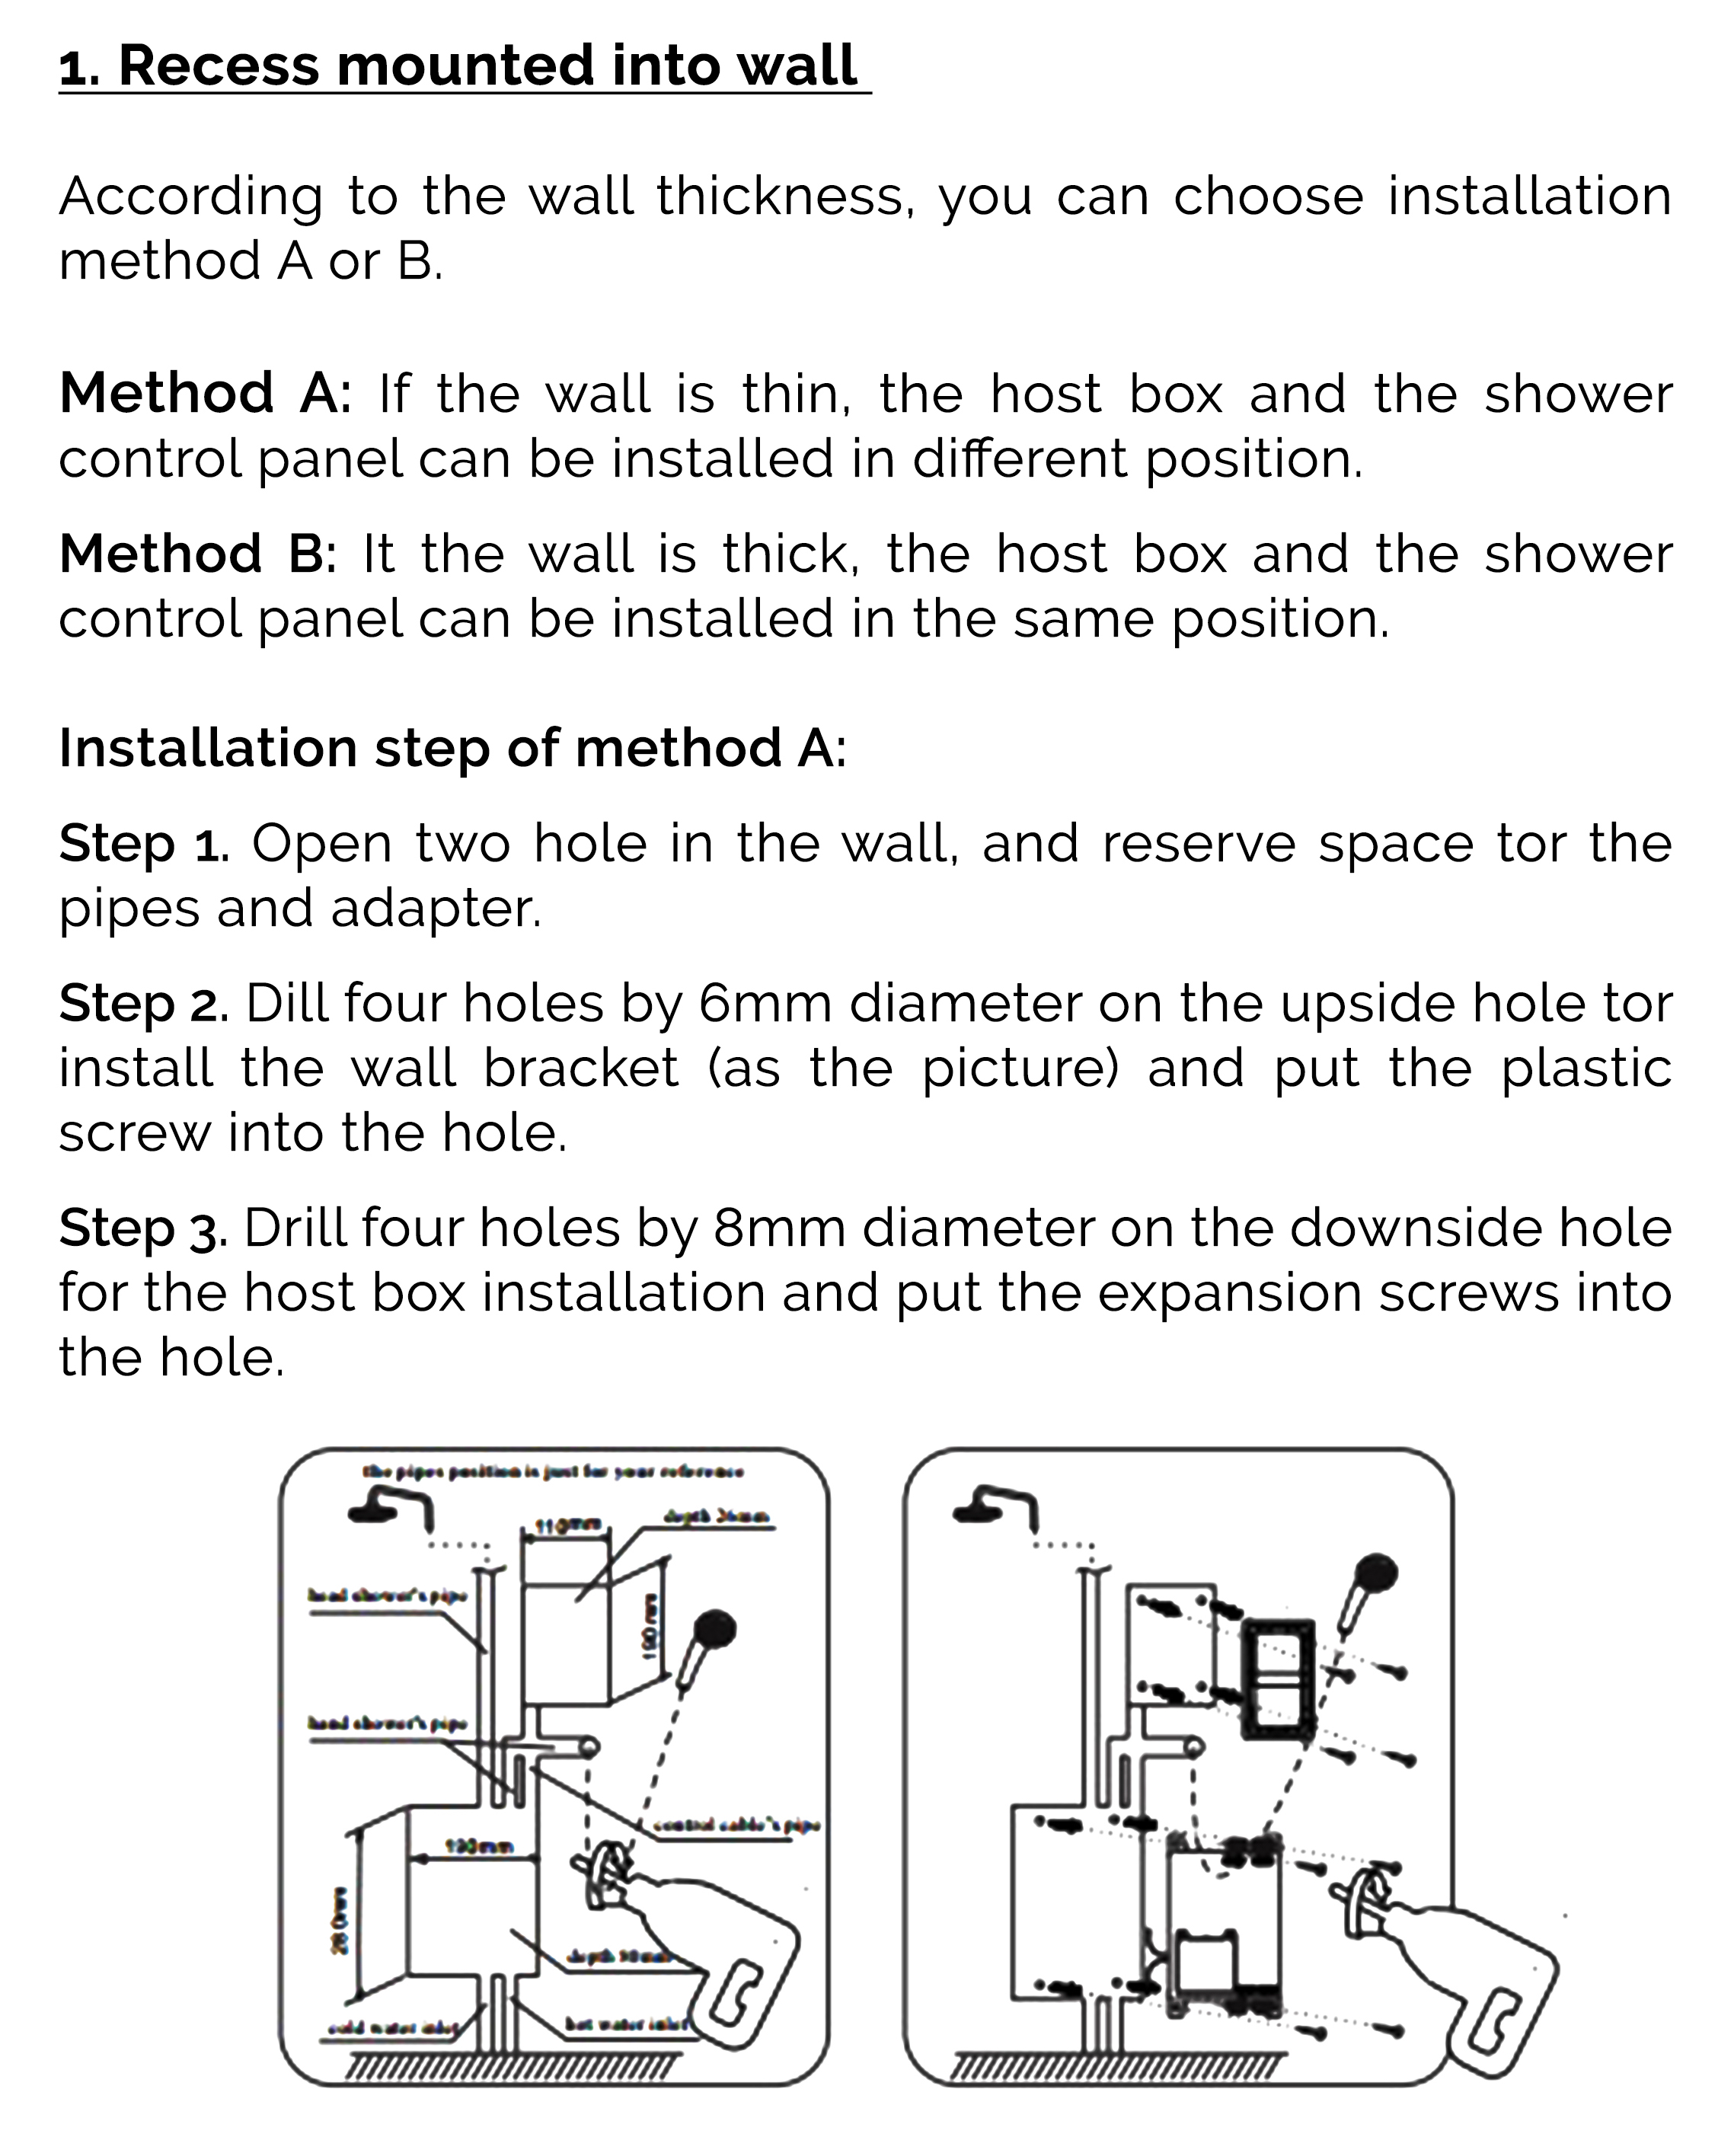 Shower System Digital Shower Control Shower Mixer